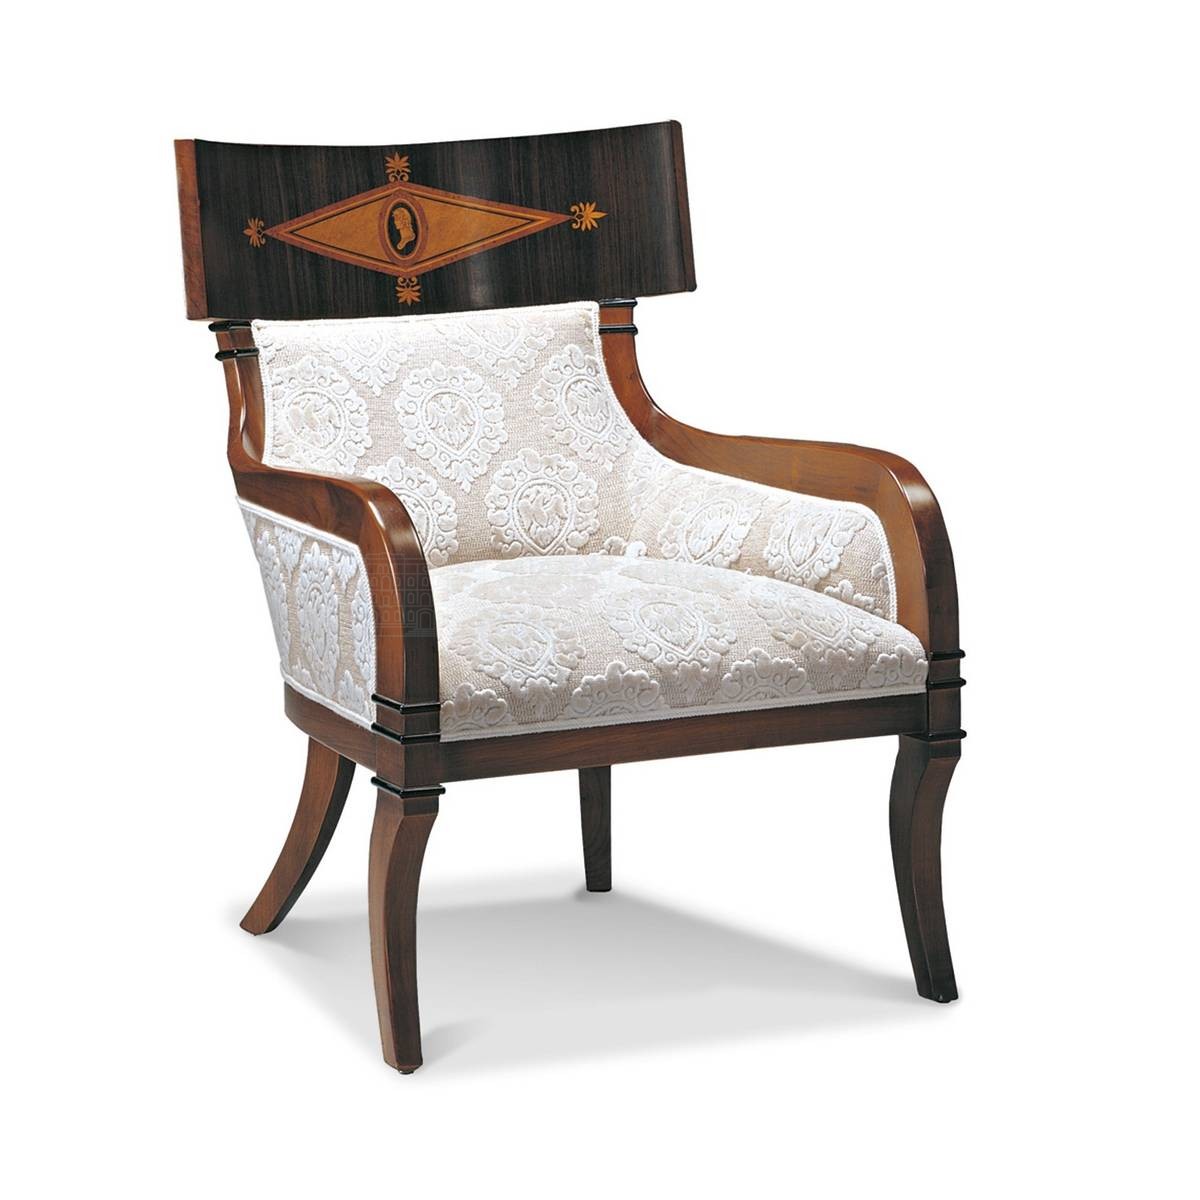 Кресло The Upholstery/P57 из Италии фабрики FRANCESCO MOLON